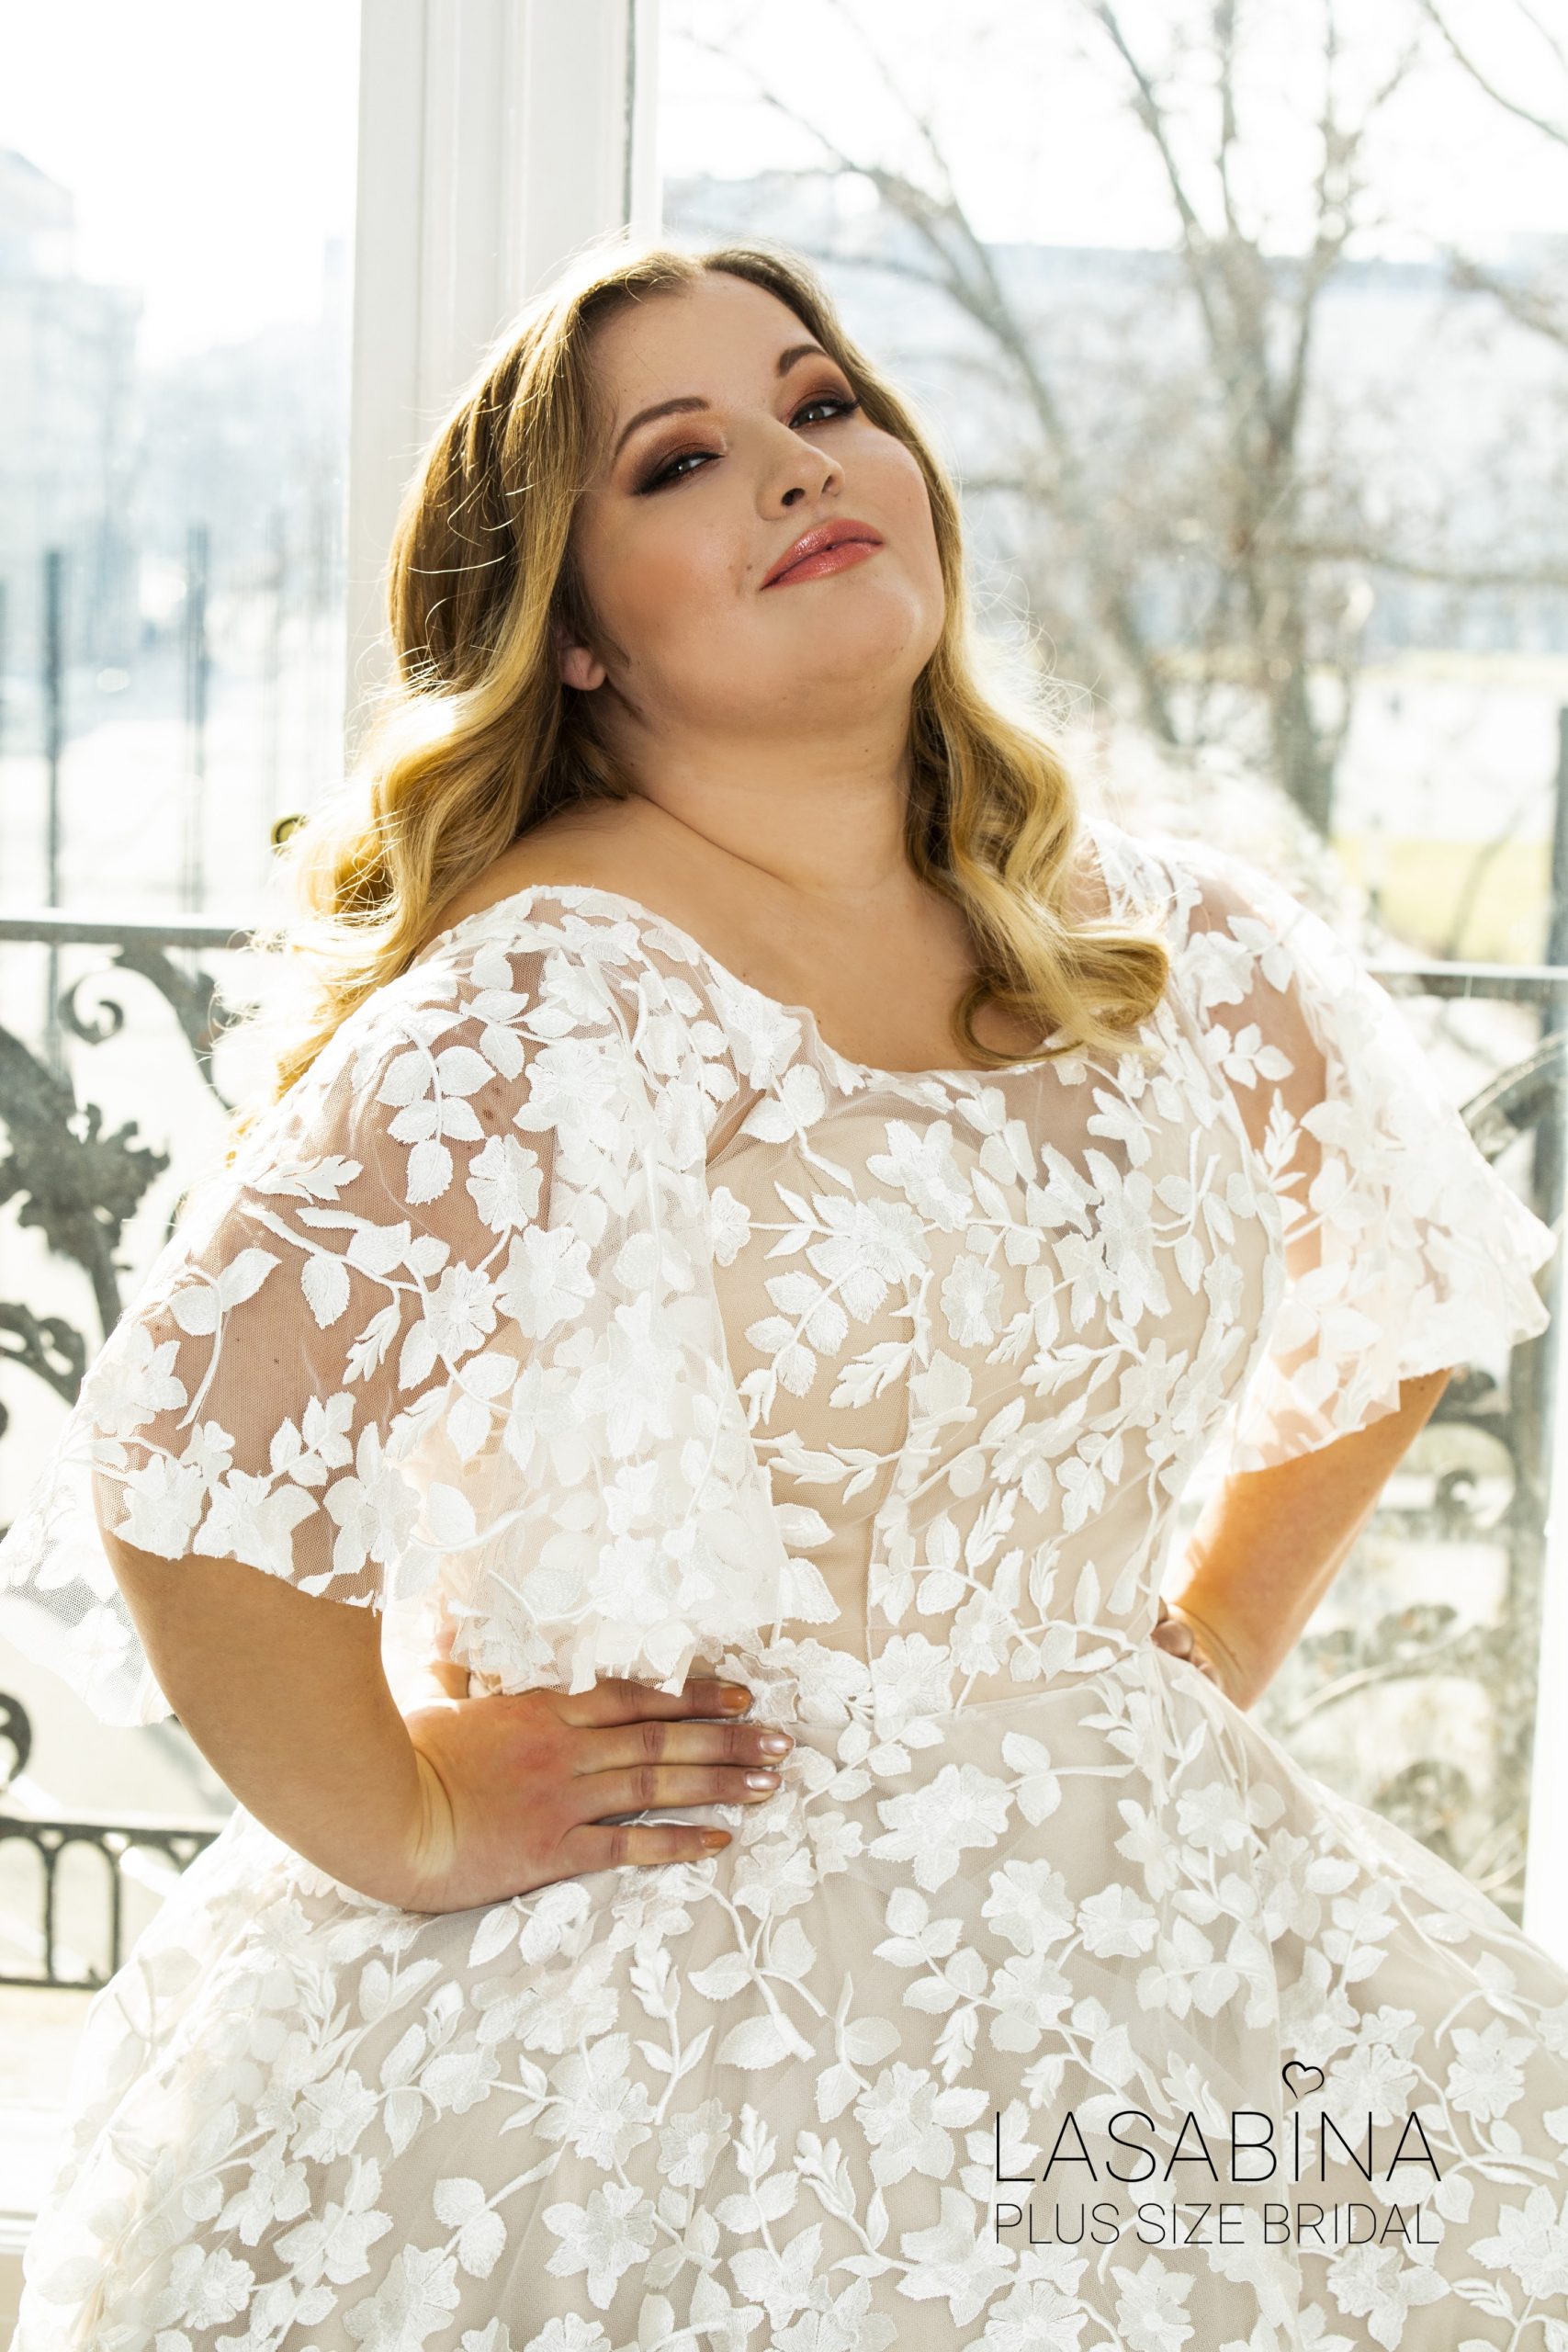 ESTELLA size dress - Plus Size Bridal